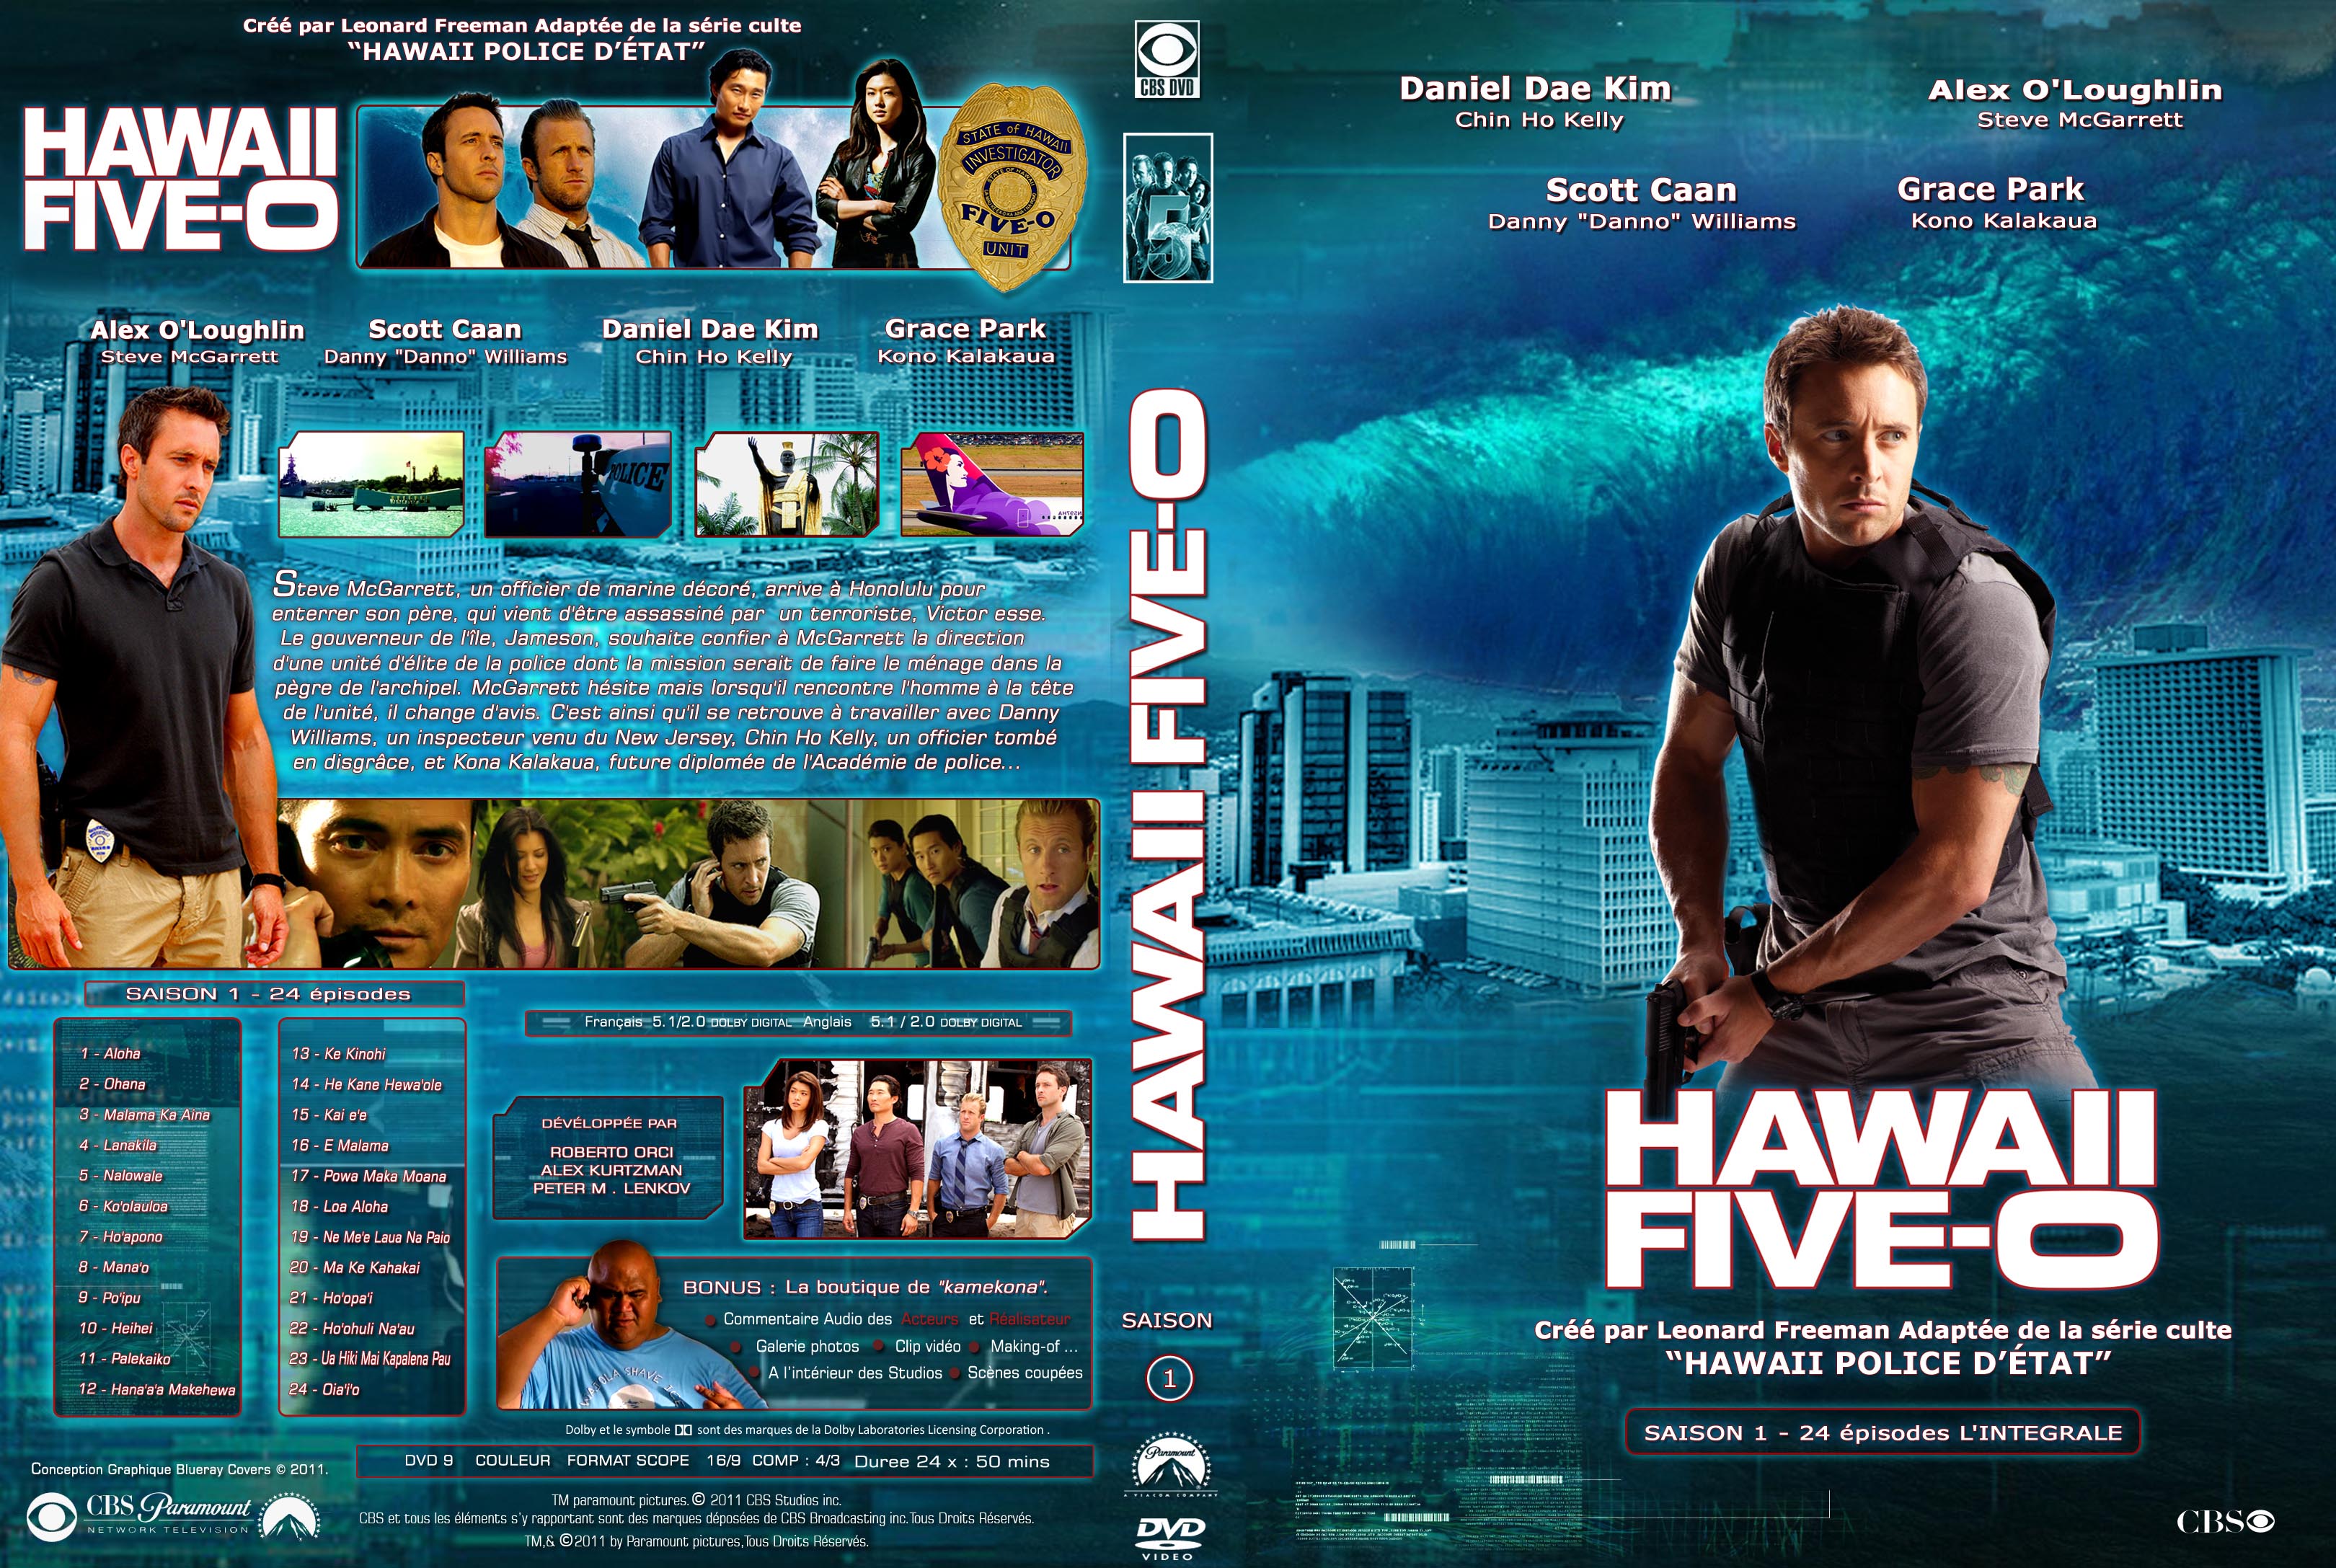 Jaquette DVD Hawaii Five-O Saison 1 custom